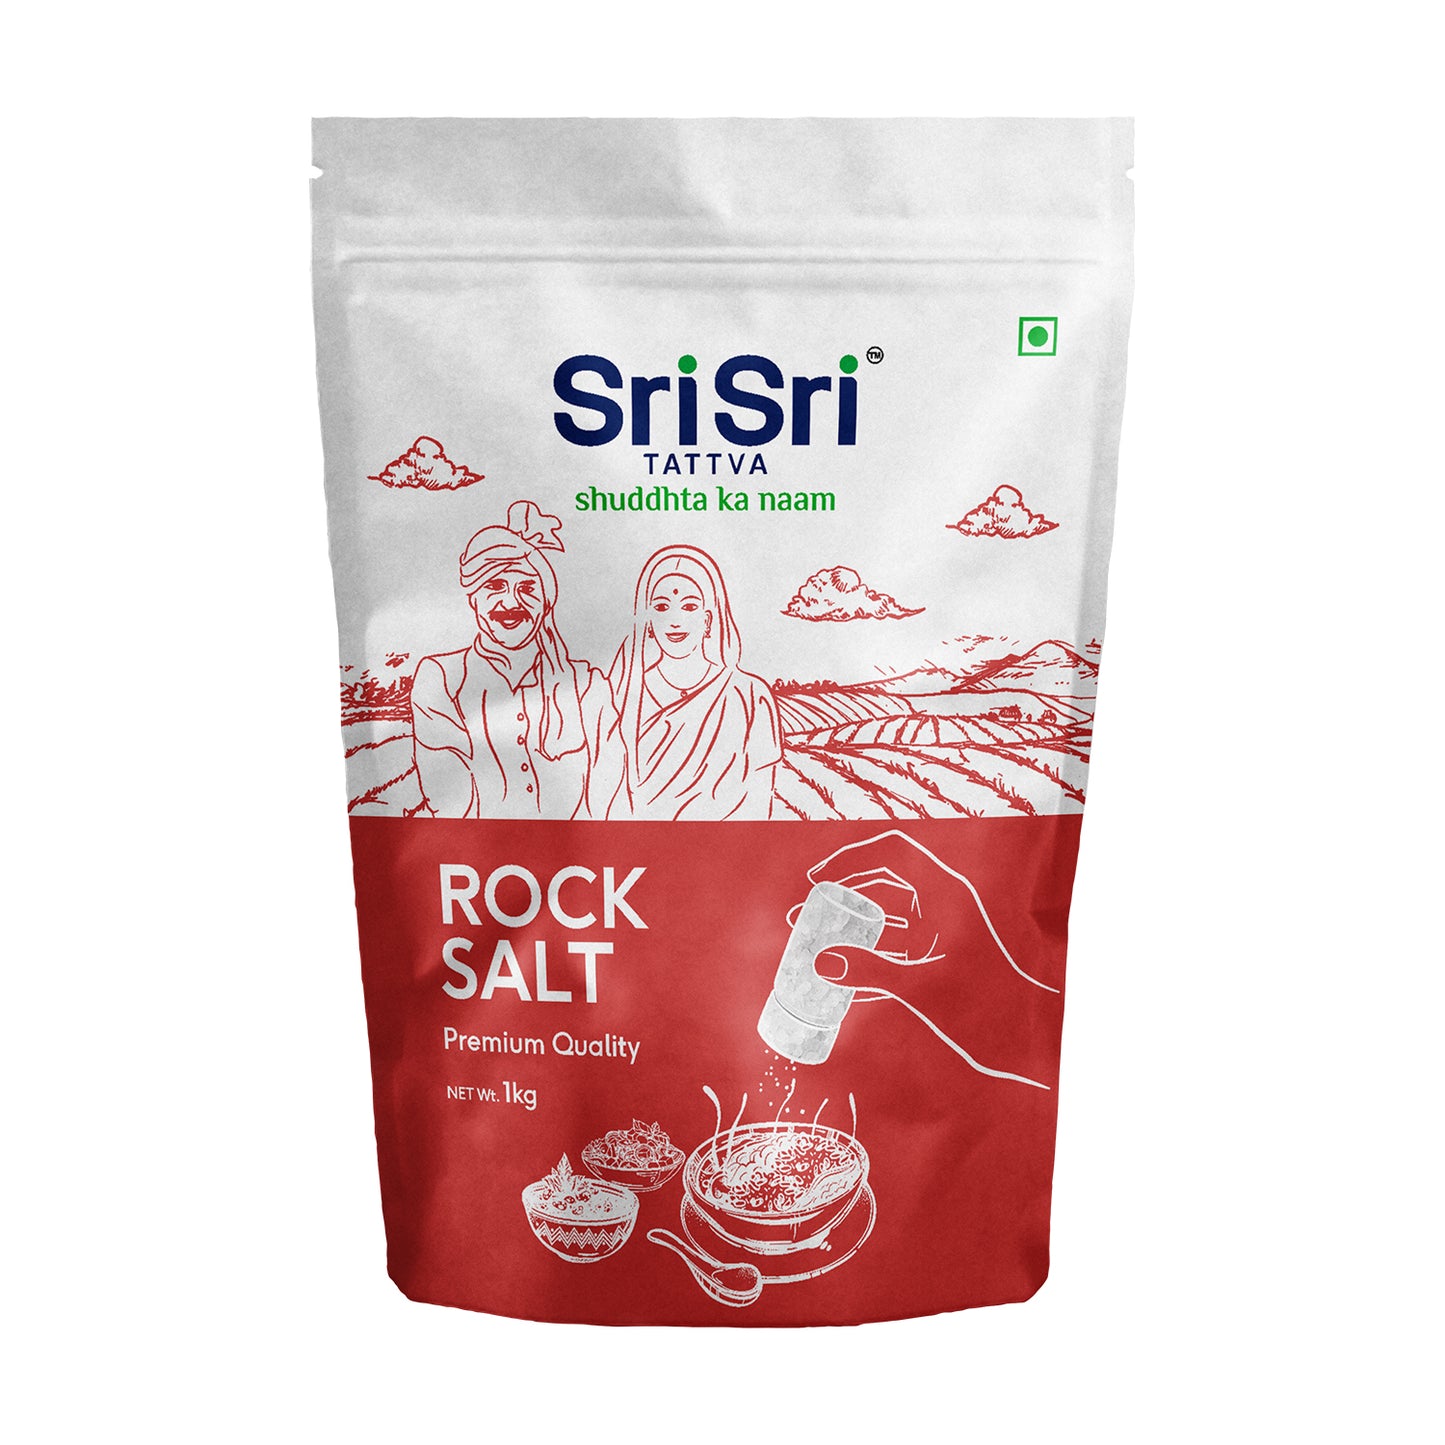 Essential Kitchen Combo | Rock Salt 1 kg & Turmaric Powder 100 g